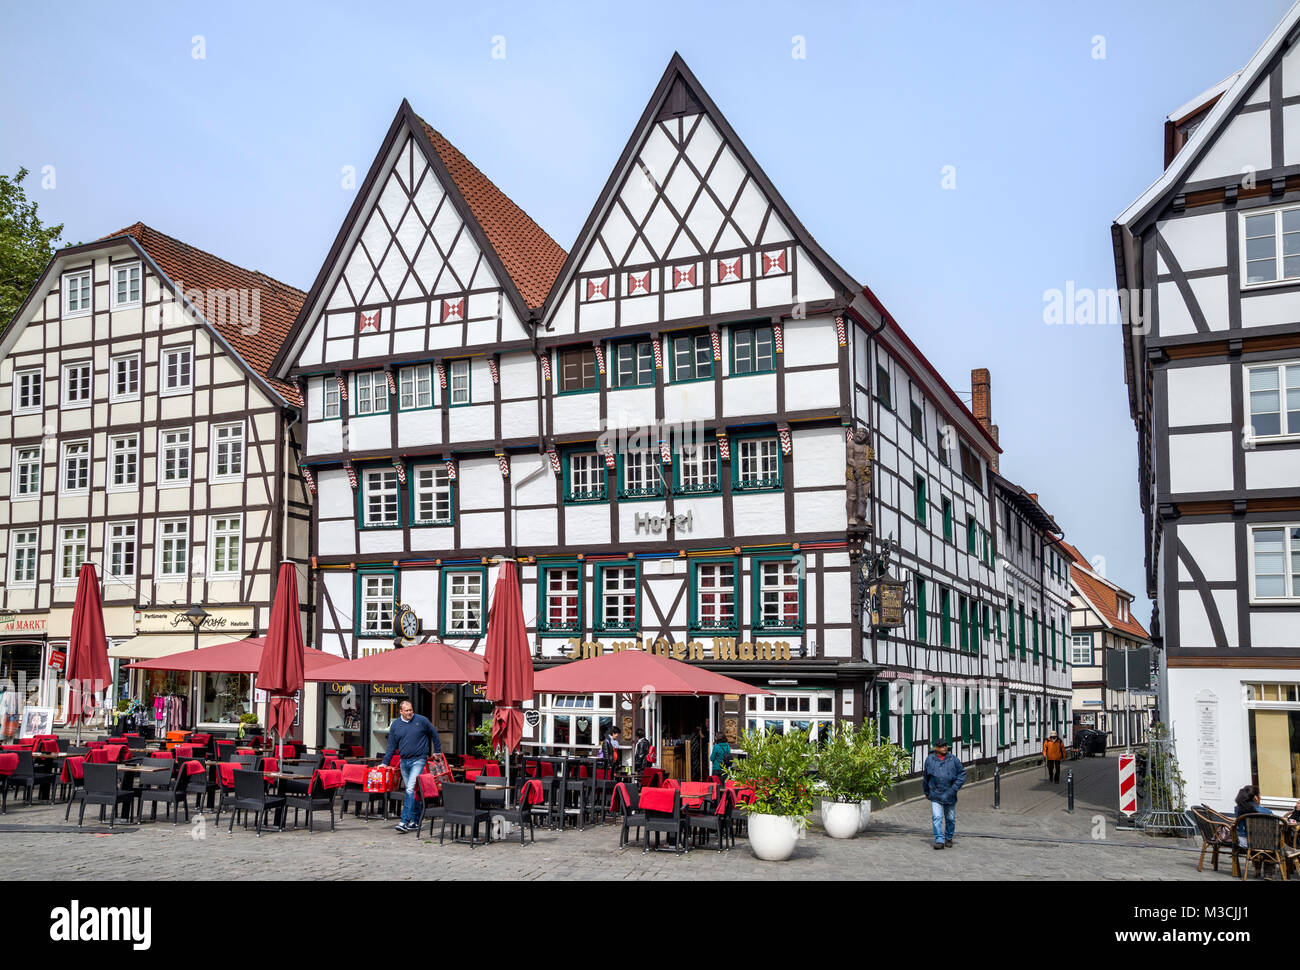 Hotel Im Wilden Mann, half-timbered houses at Markt (Market Square) in Soest, Ostwestfalen Region, North Rhine-Westphalia, Germany Stock Photo